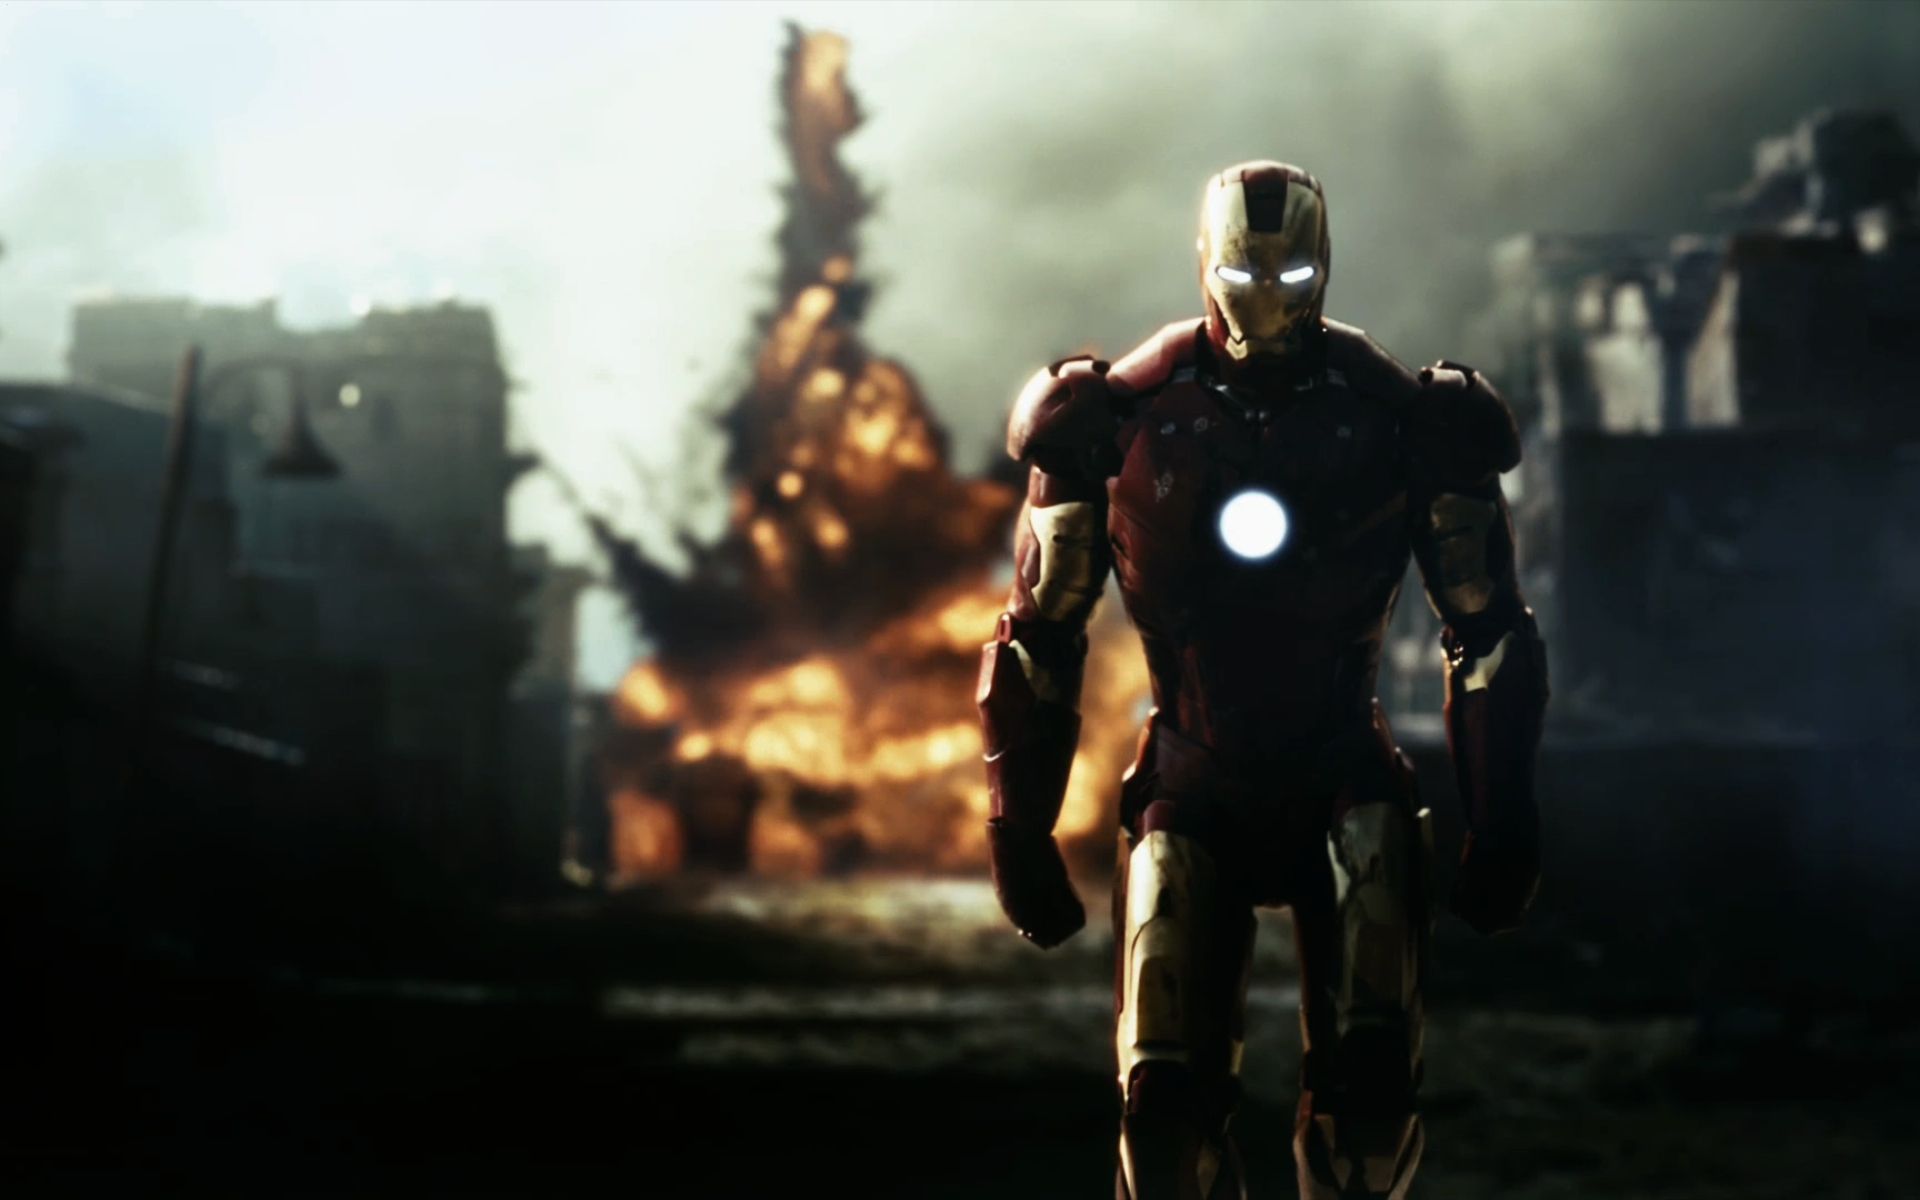 Iron Man desktop background download Wallpapers, Backgrounds